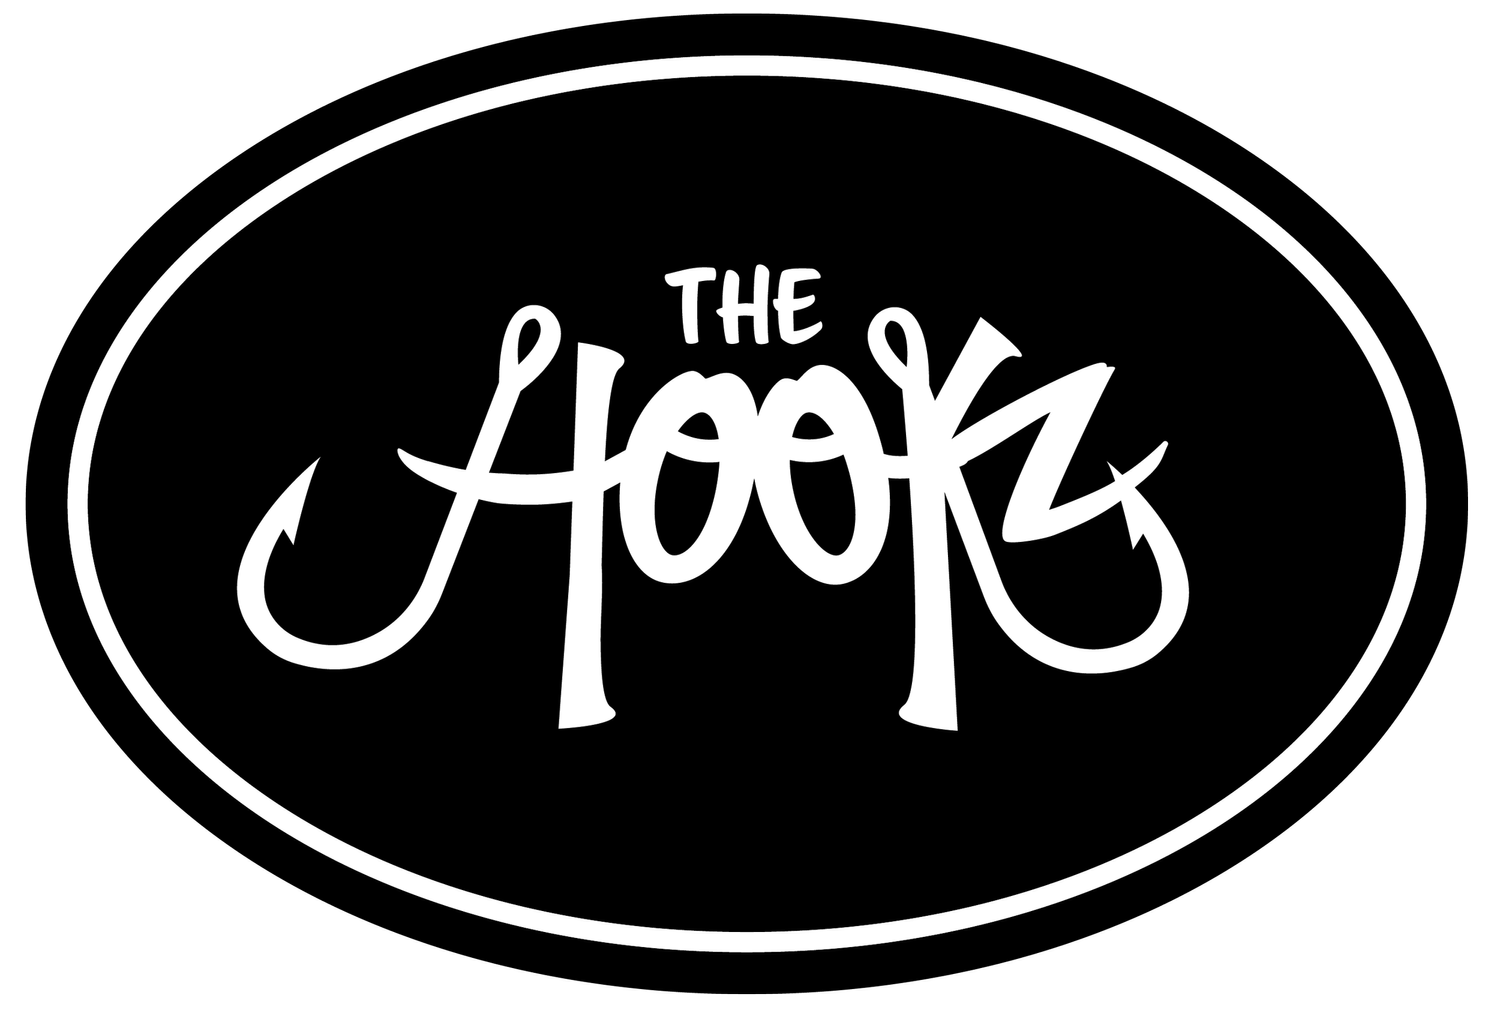 The Hookz